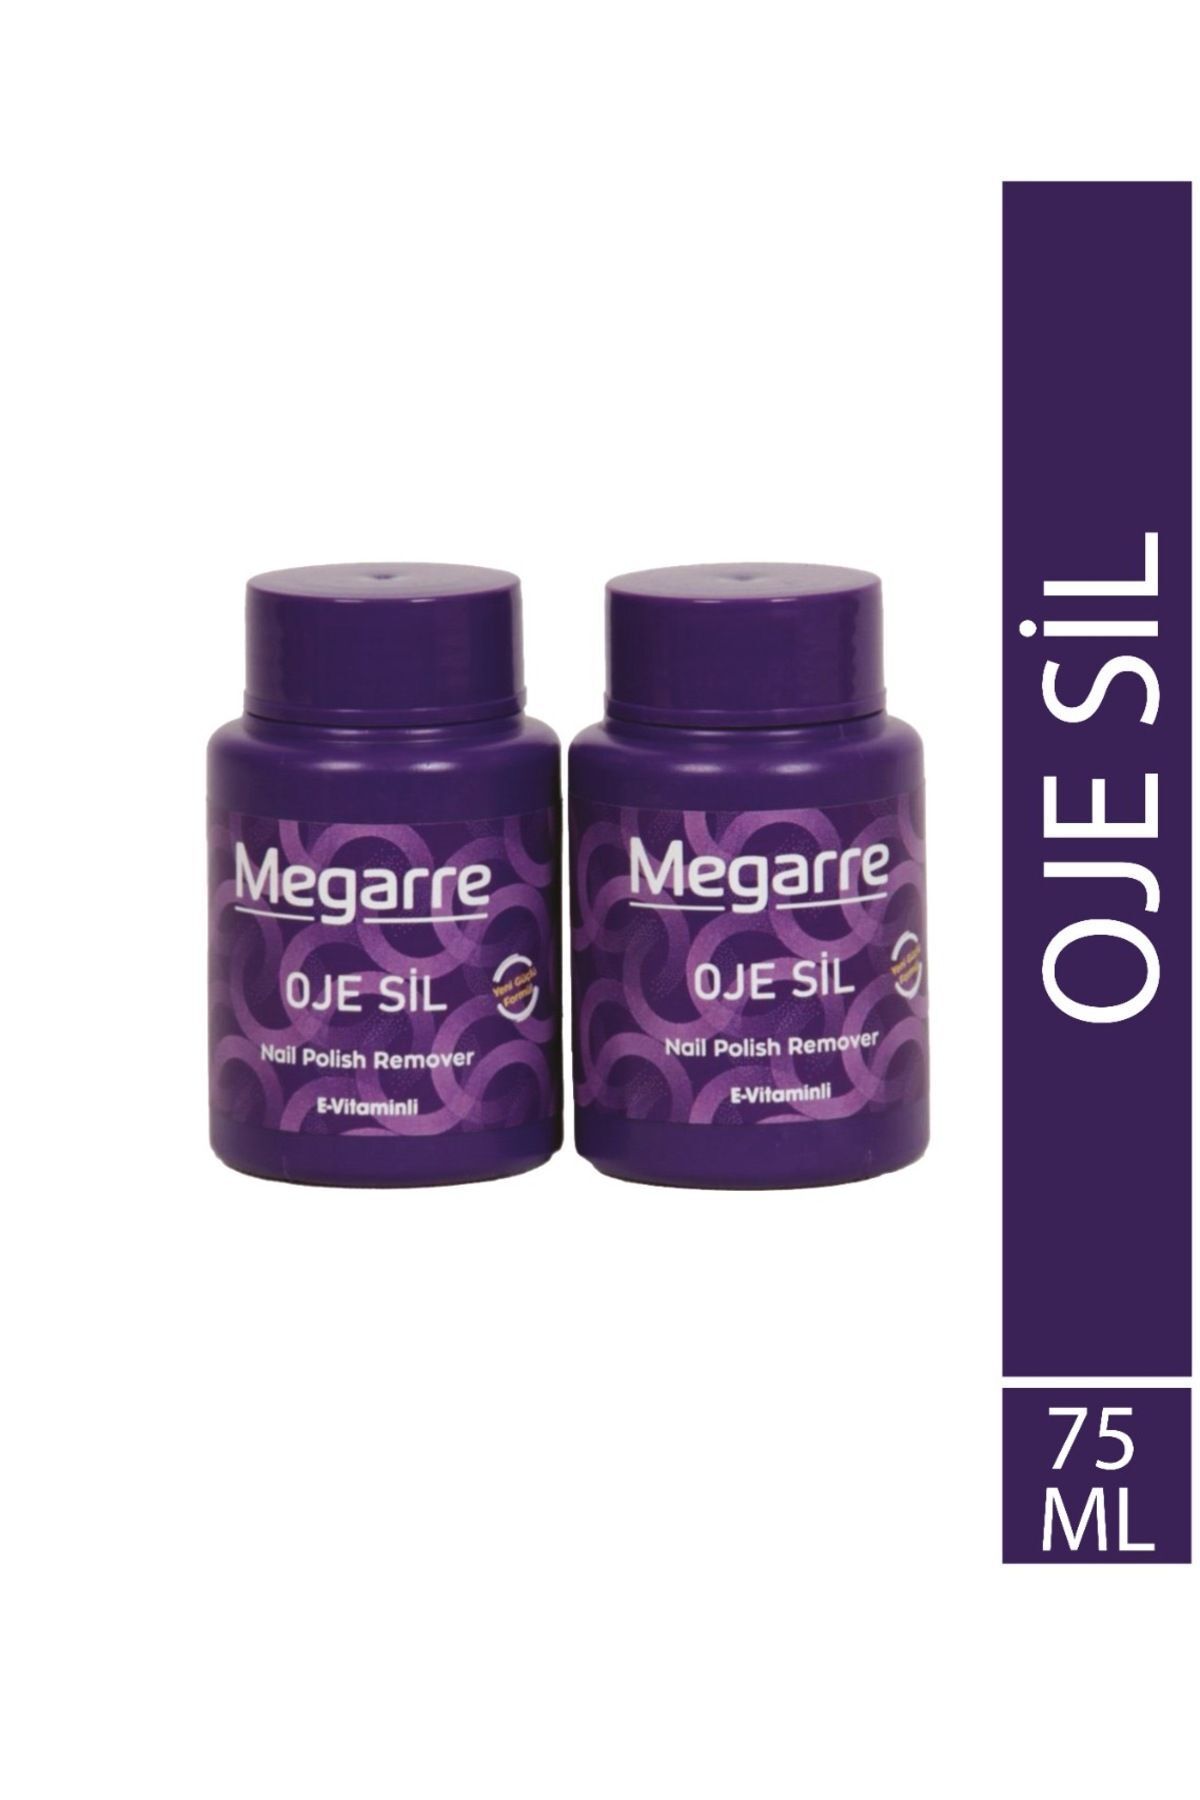 MEGARRE Oje Sil E-Vitaminli 2'li avantajlı fiyat